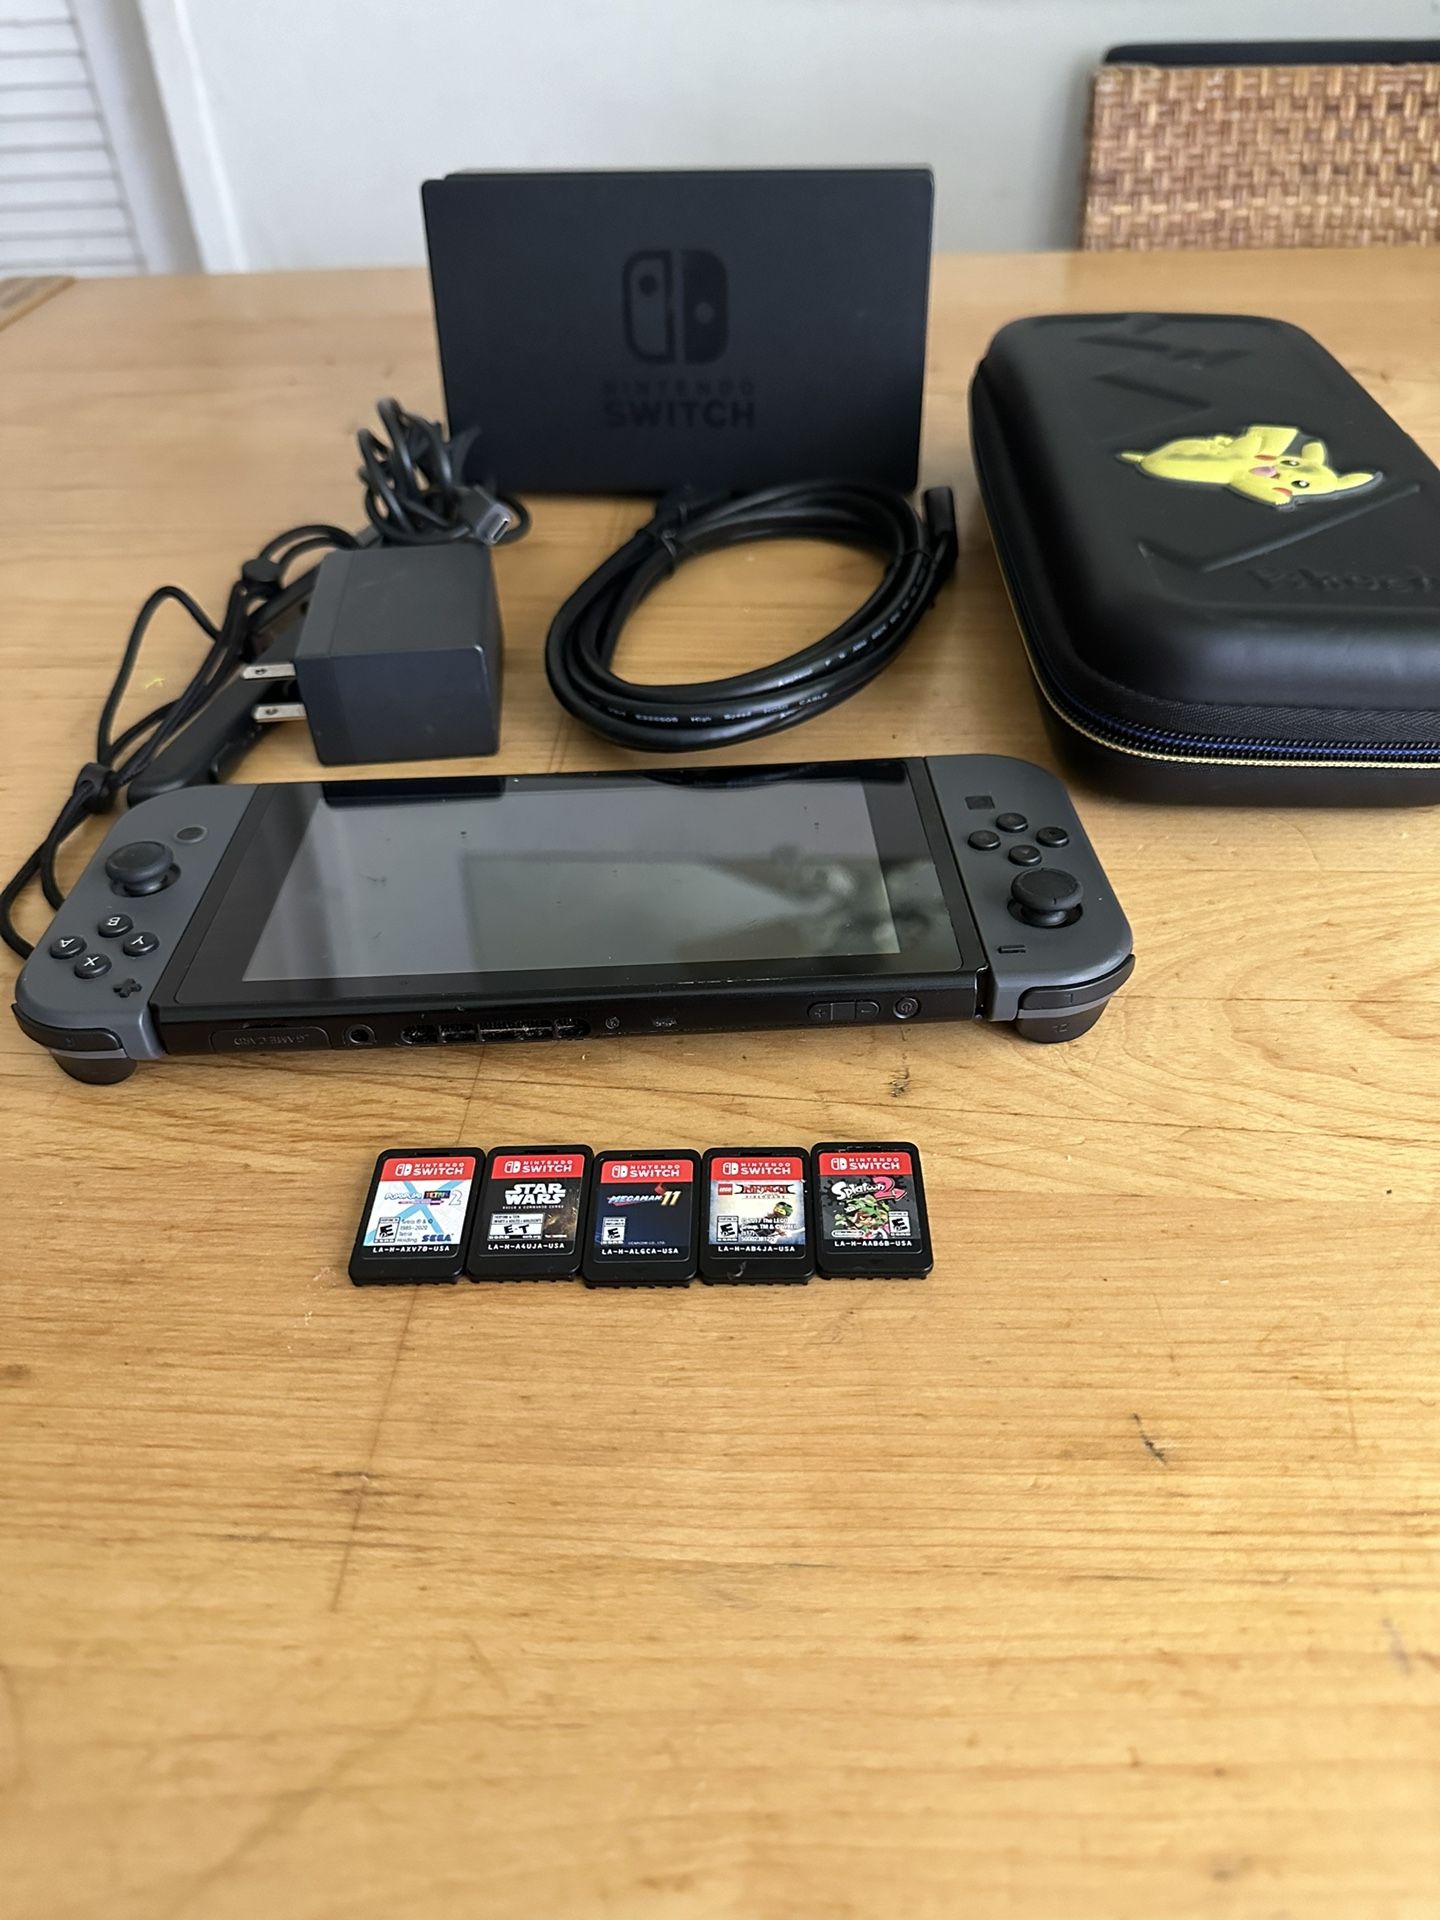 Nintendo Switch V2 Combo $250